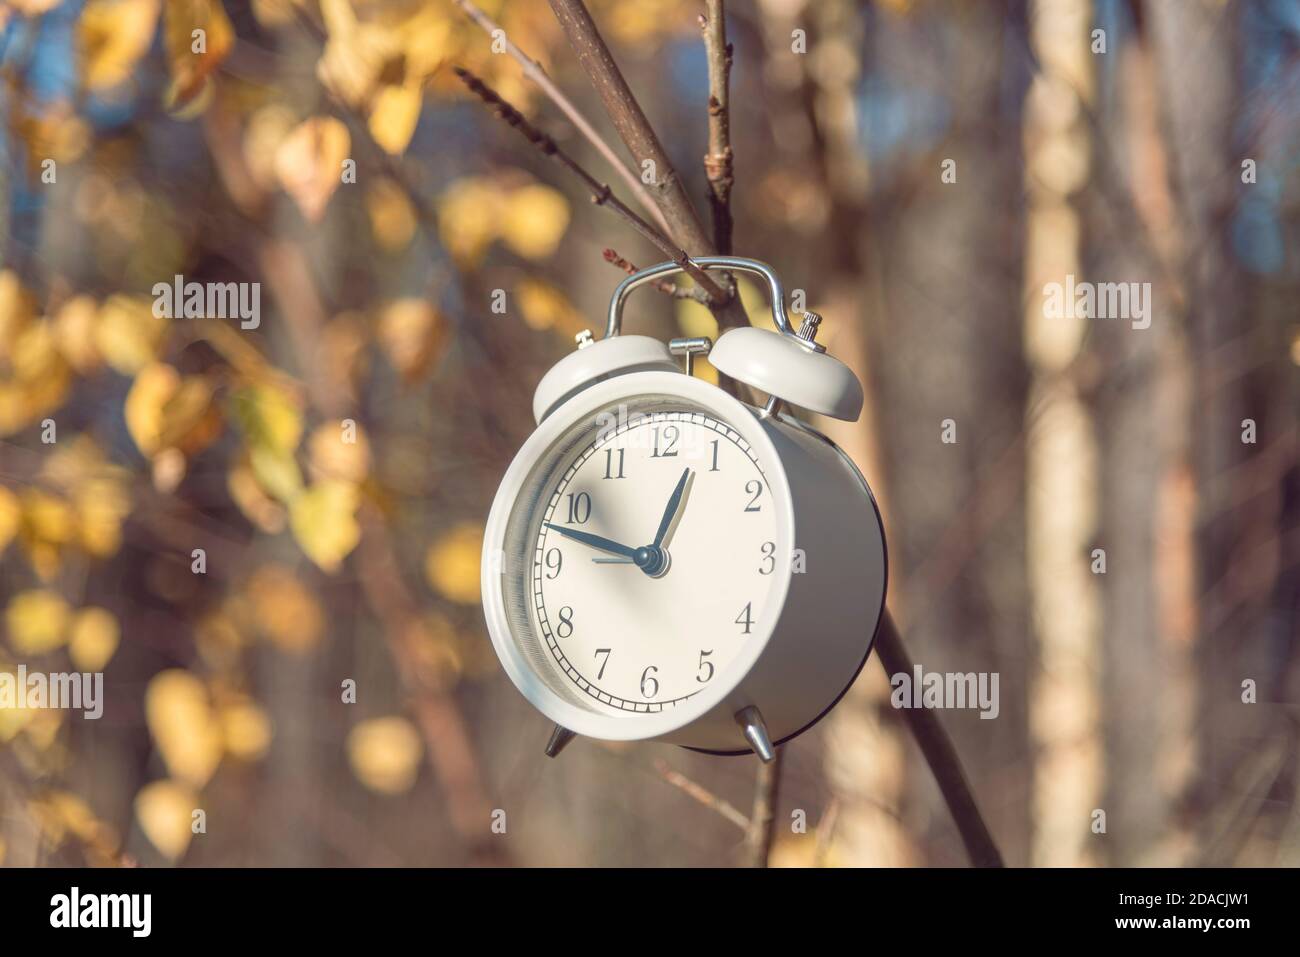 Daylight Saving Time. Change Clock To Summer Time. Stock Photo - Image of  longer, spring: 110689664